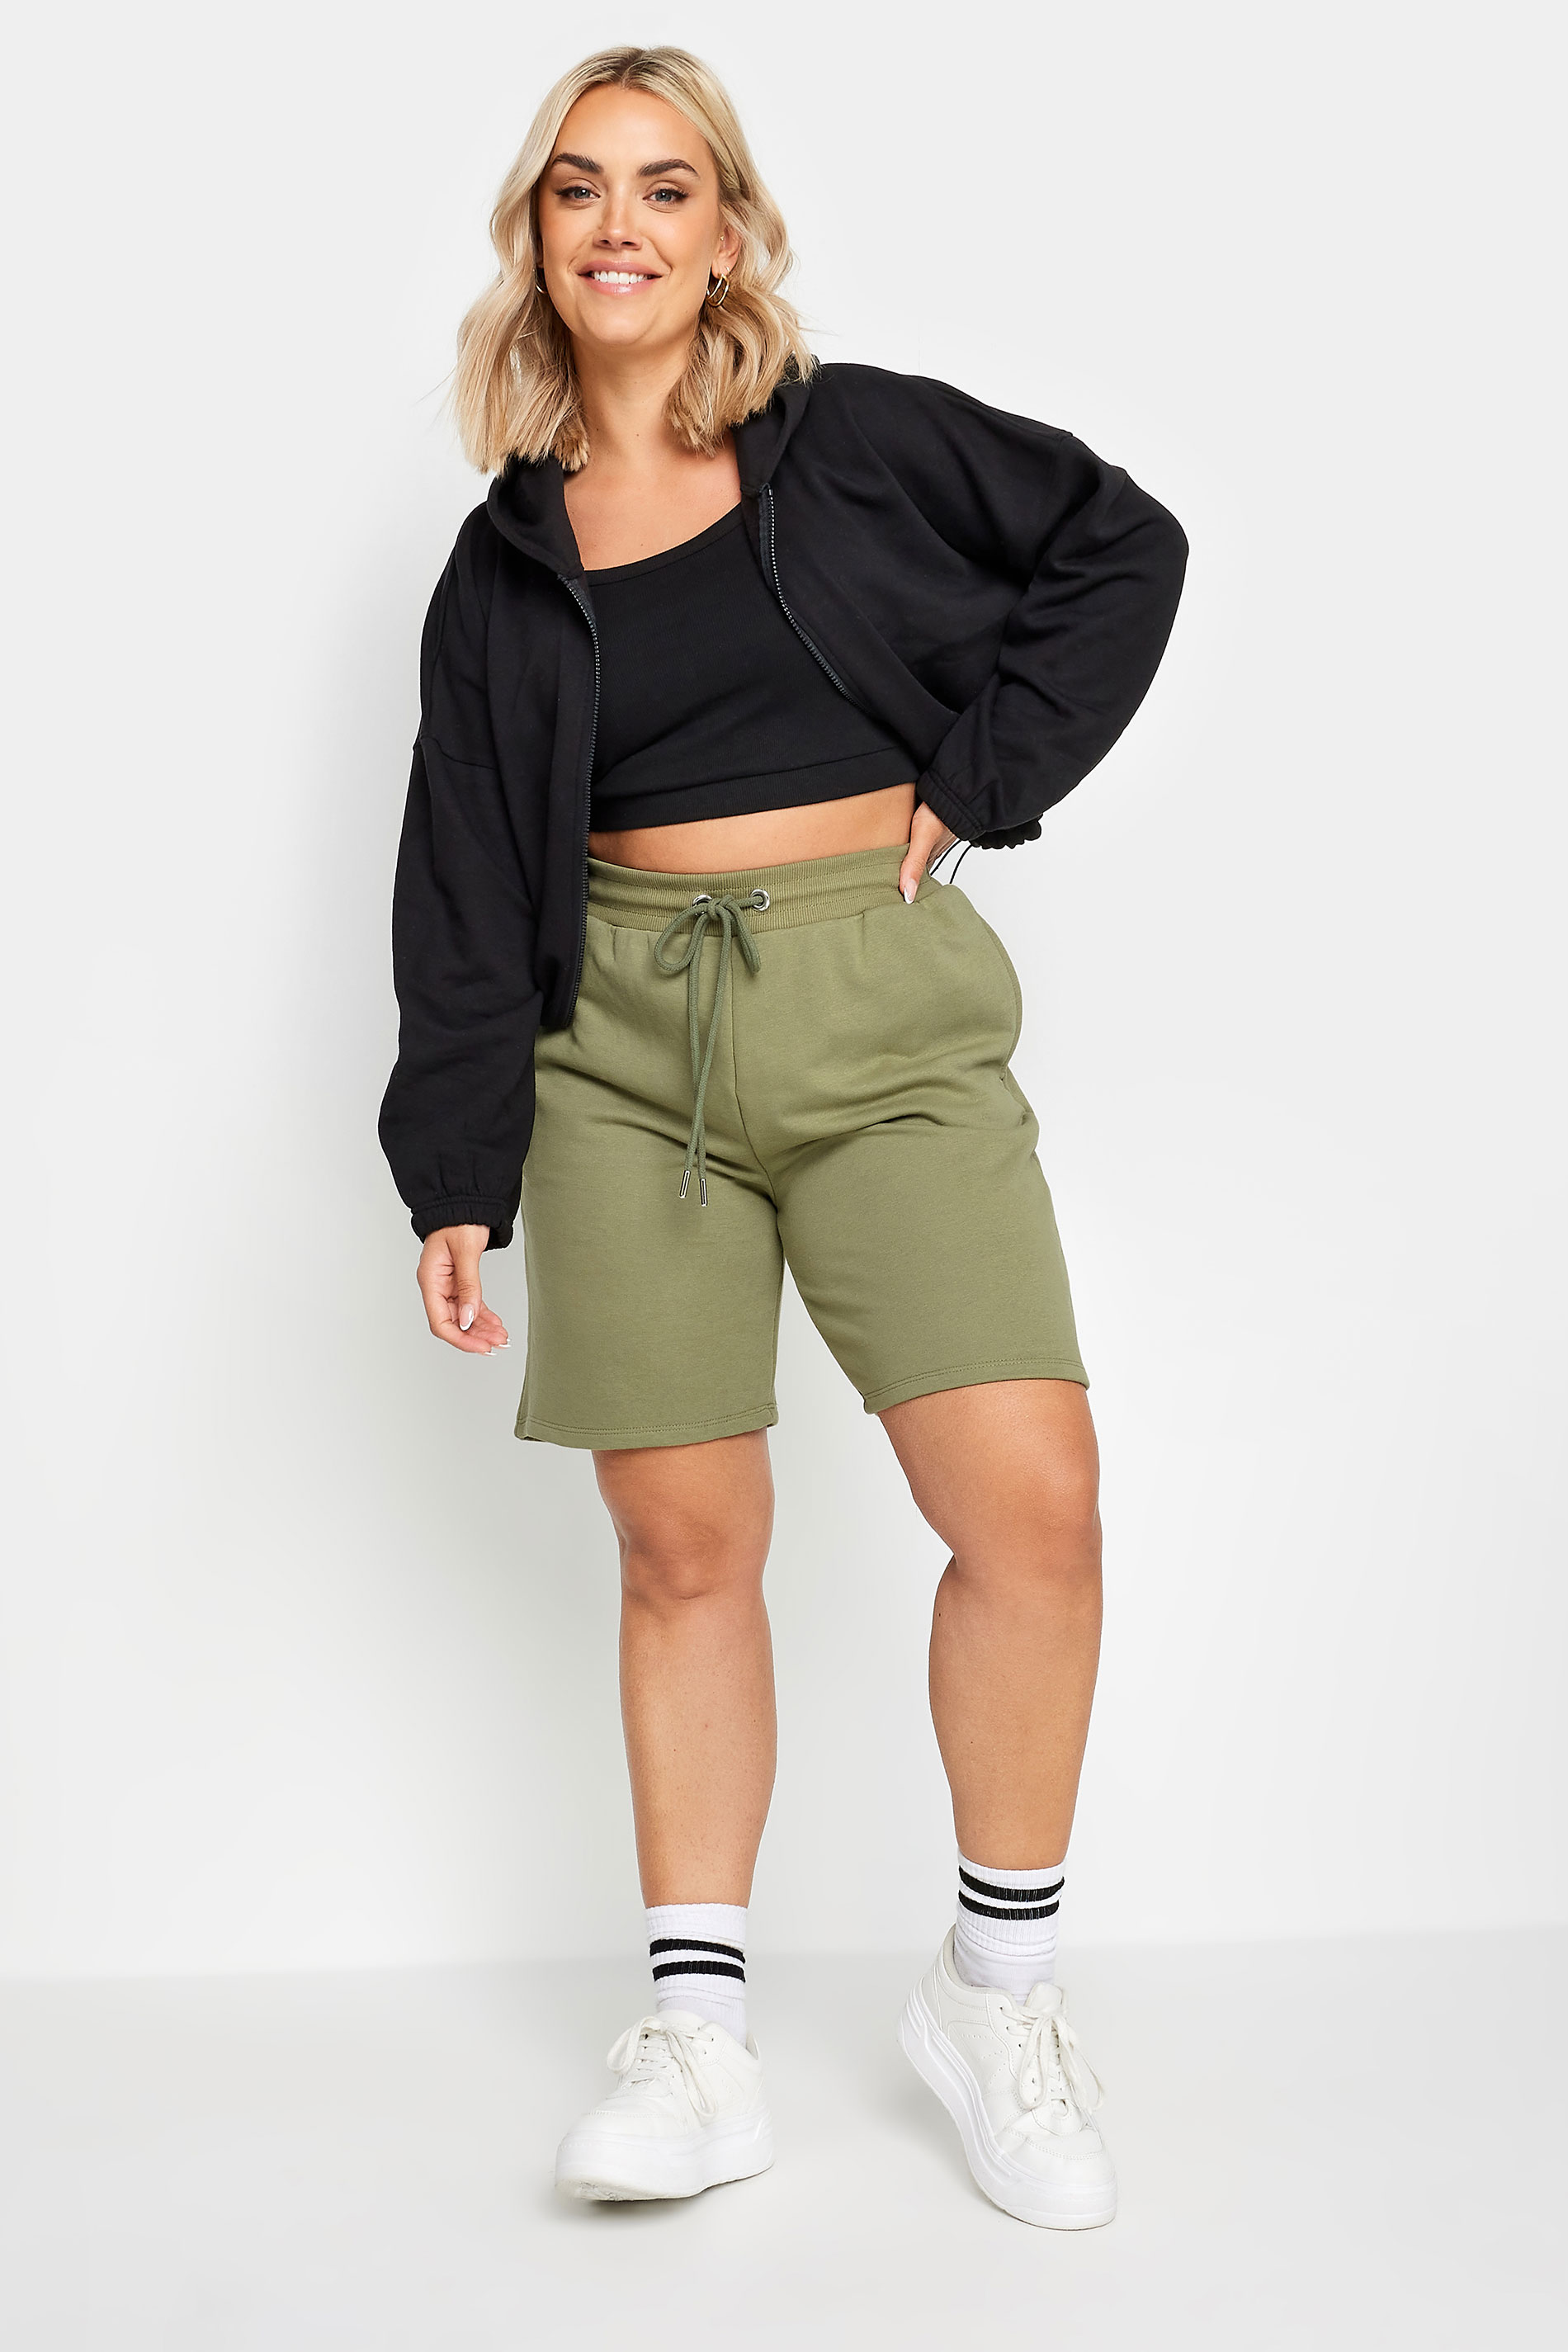 YOURS Plus Size Khaki Green Elasticated Jogger Shorts | Yours Clothing 2